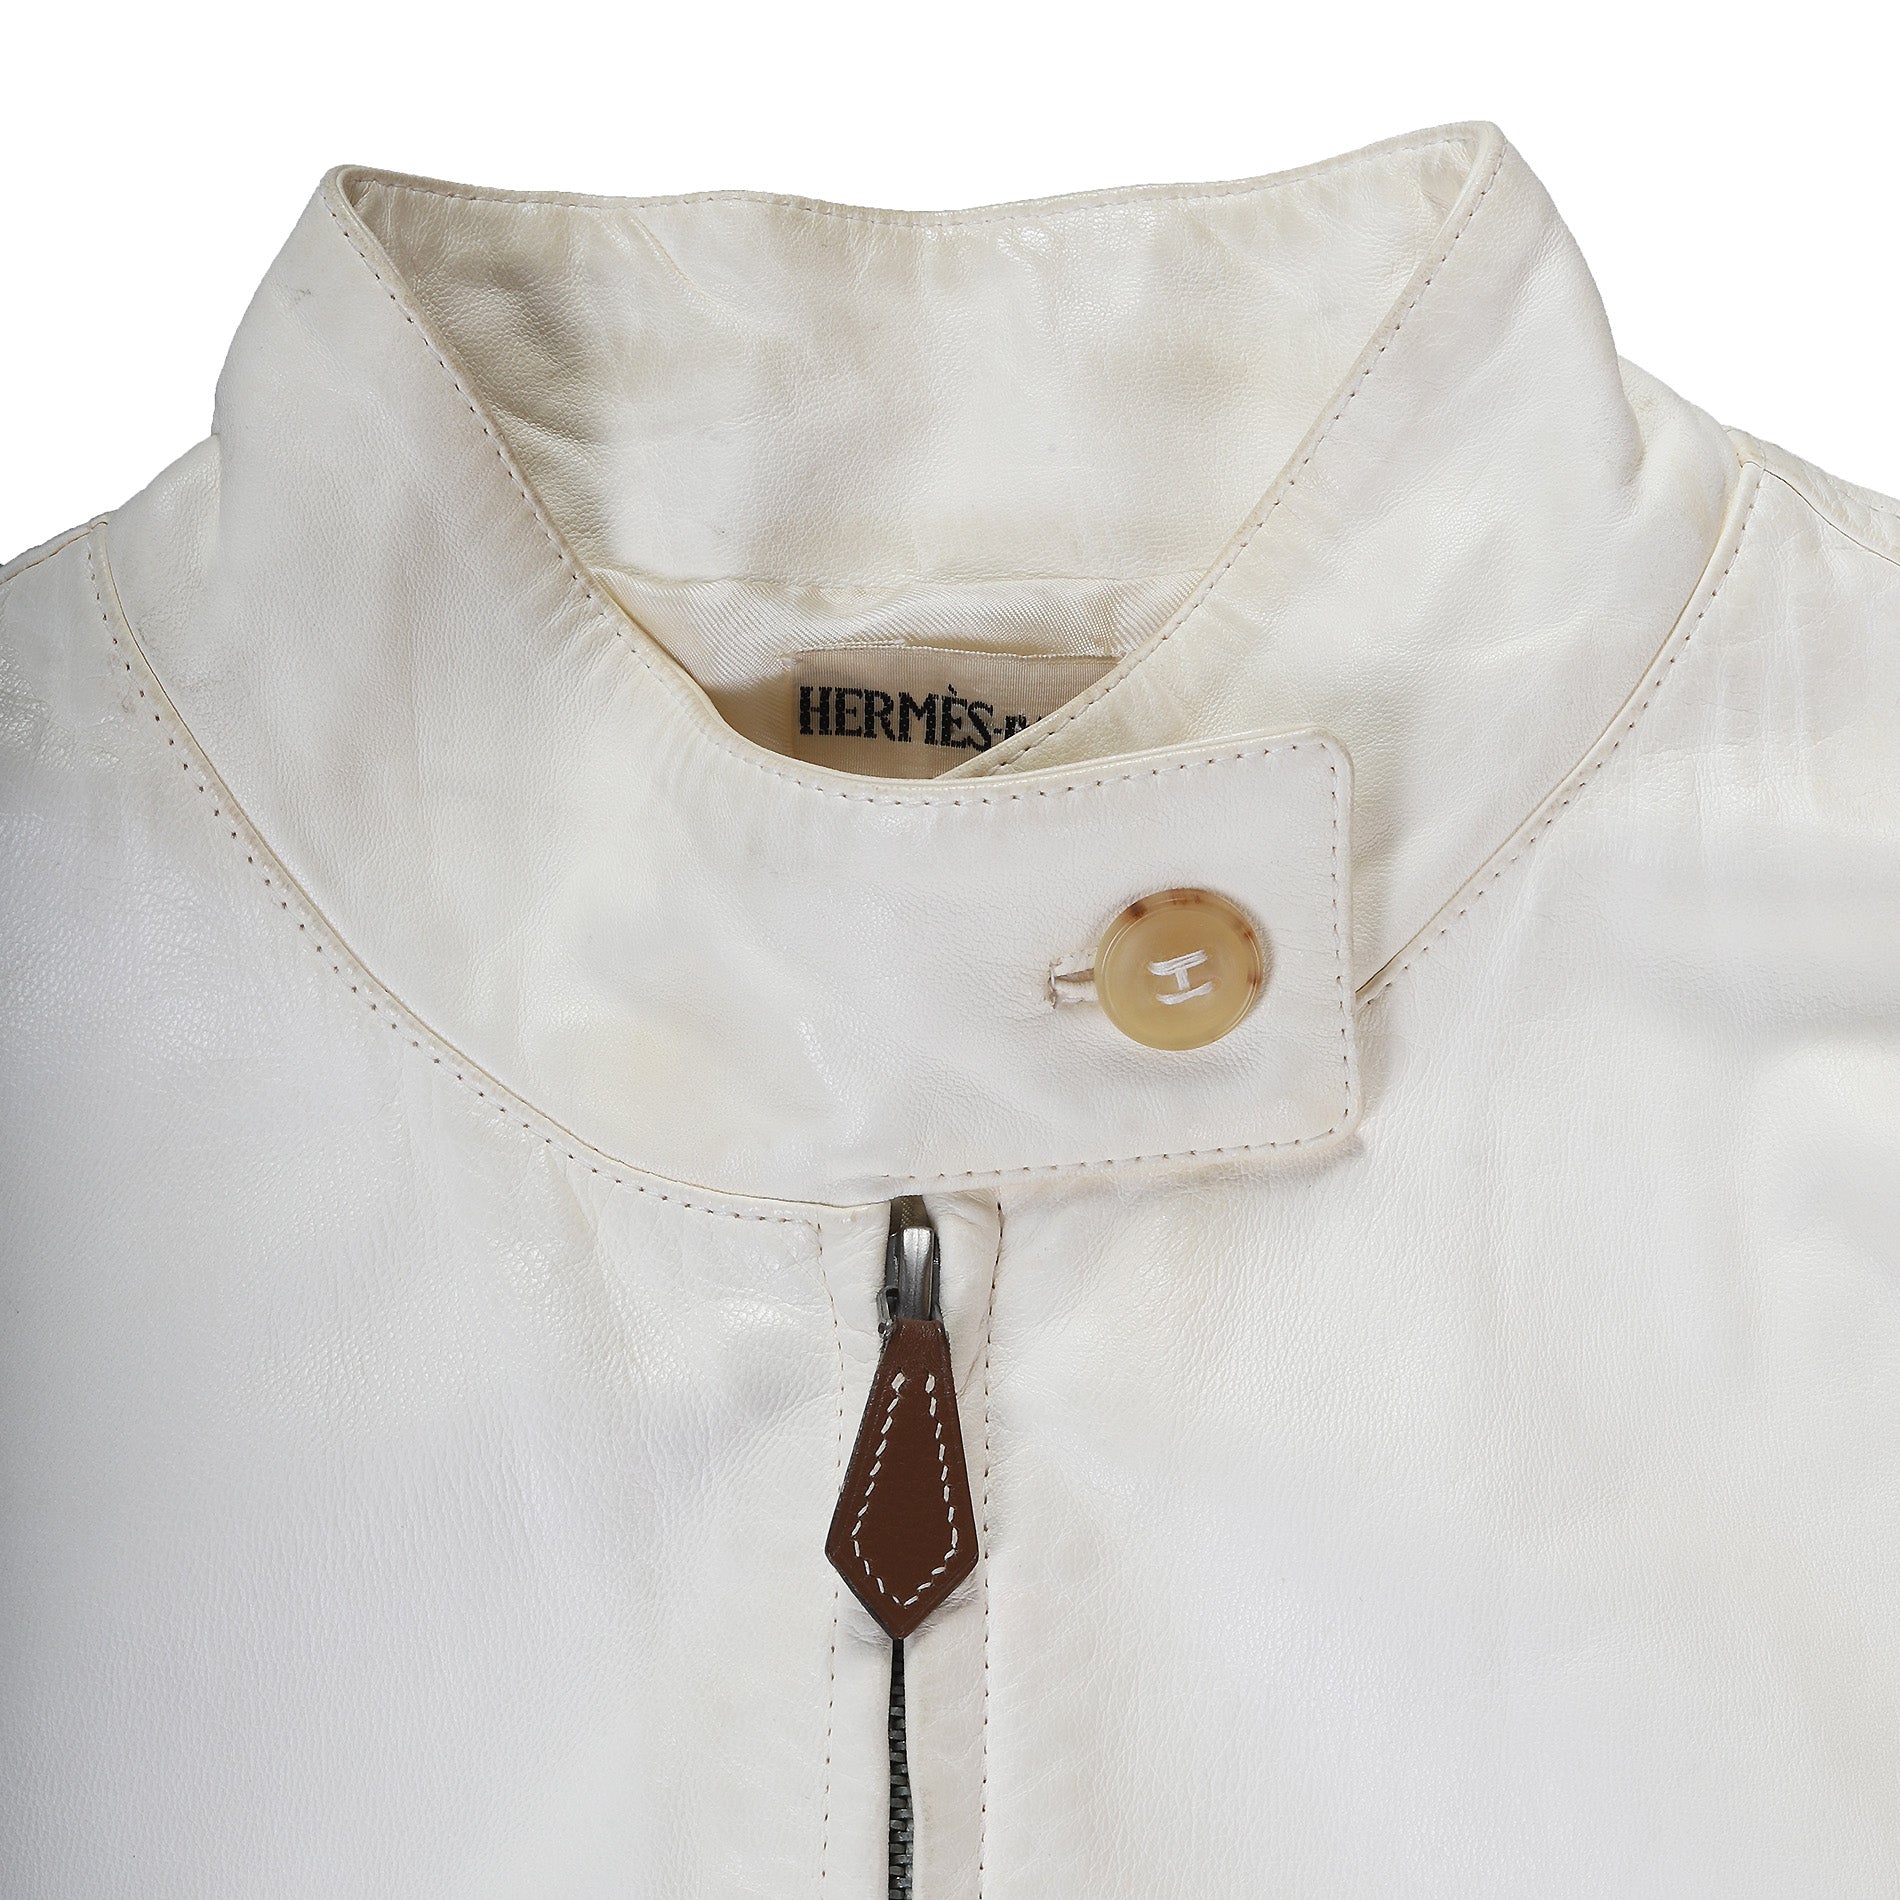 Hermès by Martin Margiela White Leather Jacket - Ākaibu Store